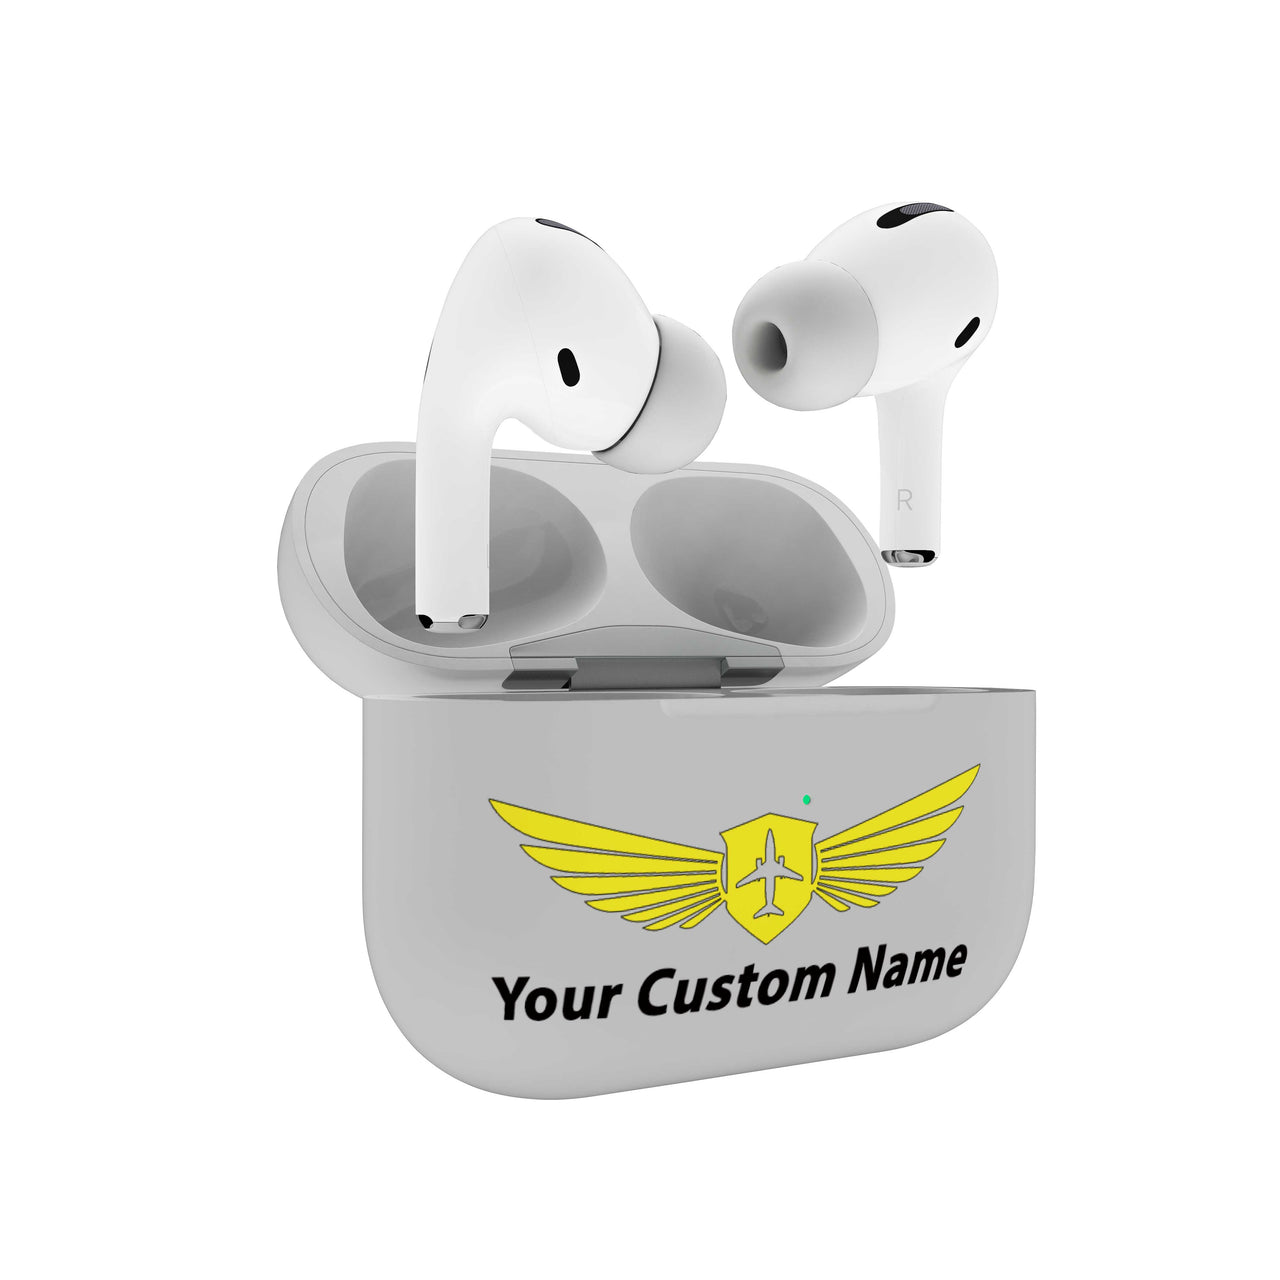 Custom Name (Badge 2) Designed Airpods "Pro" Cases